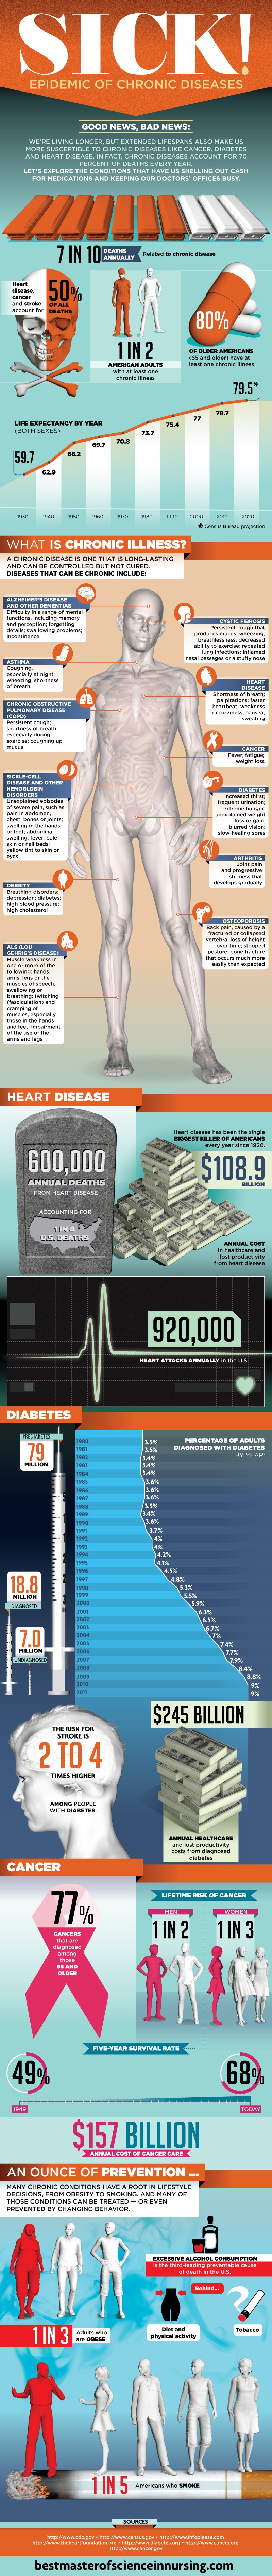 Sick! Epidemic of Chronic Diseases [Infographic]